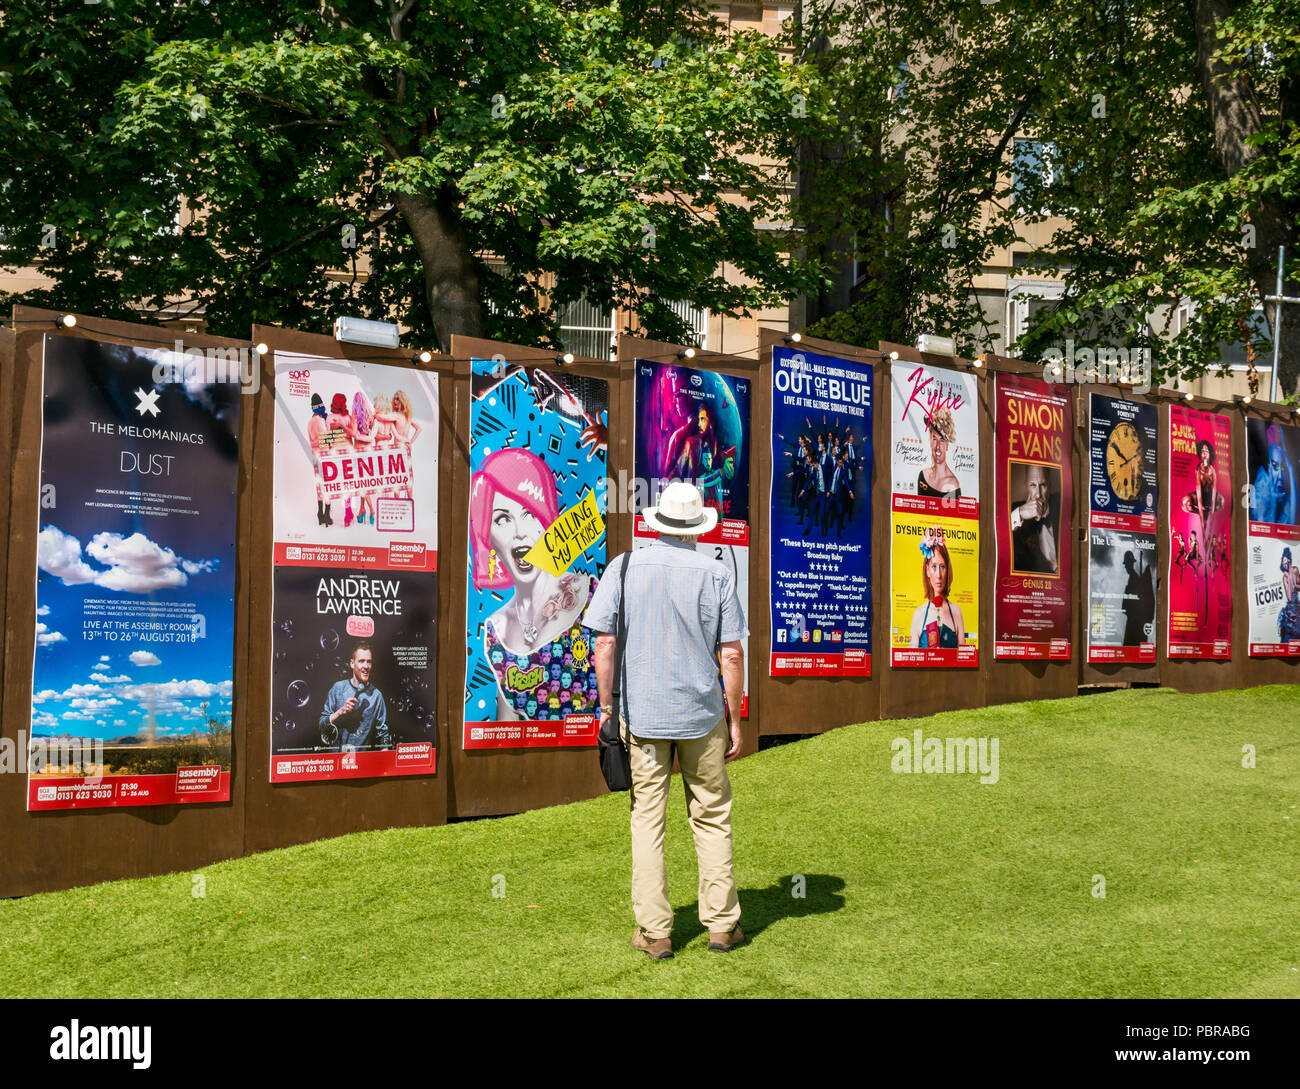 Man wearing Panama hat looks at Edinburgh Fringe Festival posters, George Square Gardens, Edinburgh, Scotland, UK Stock Photo